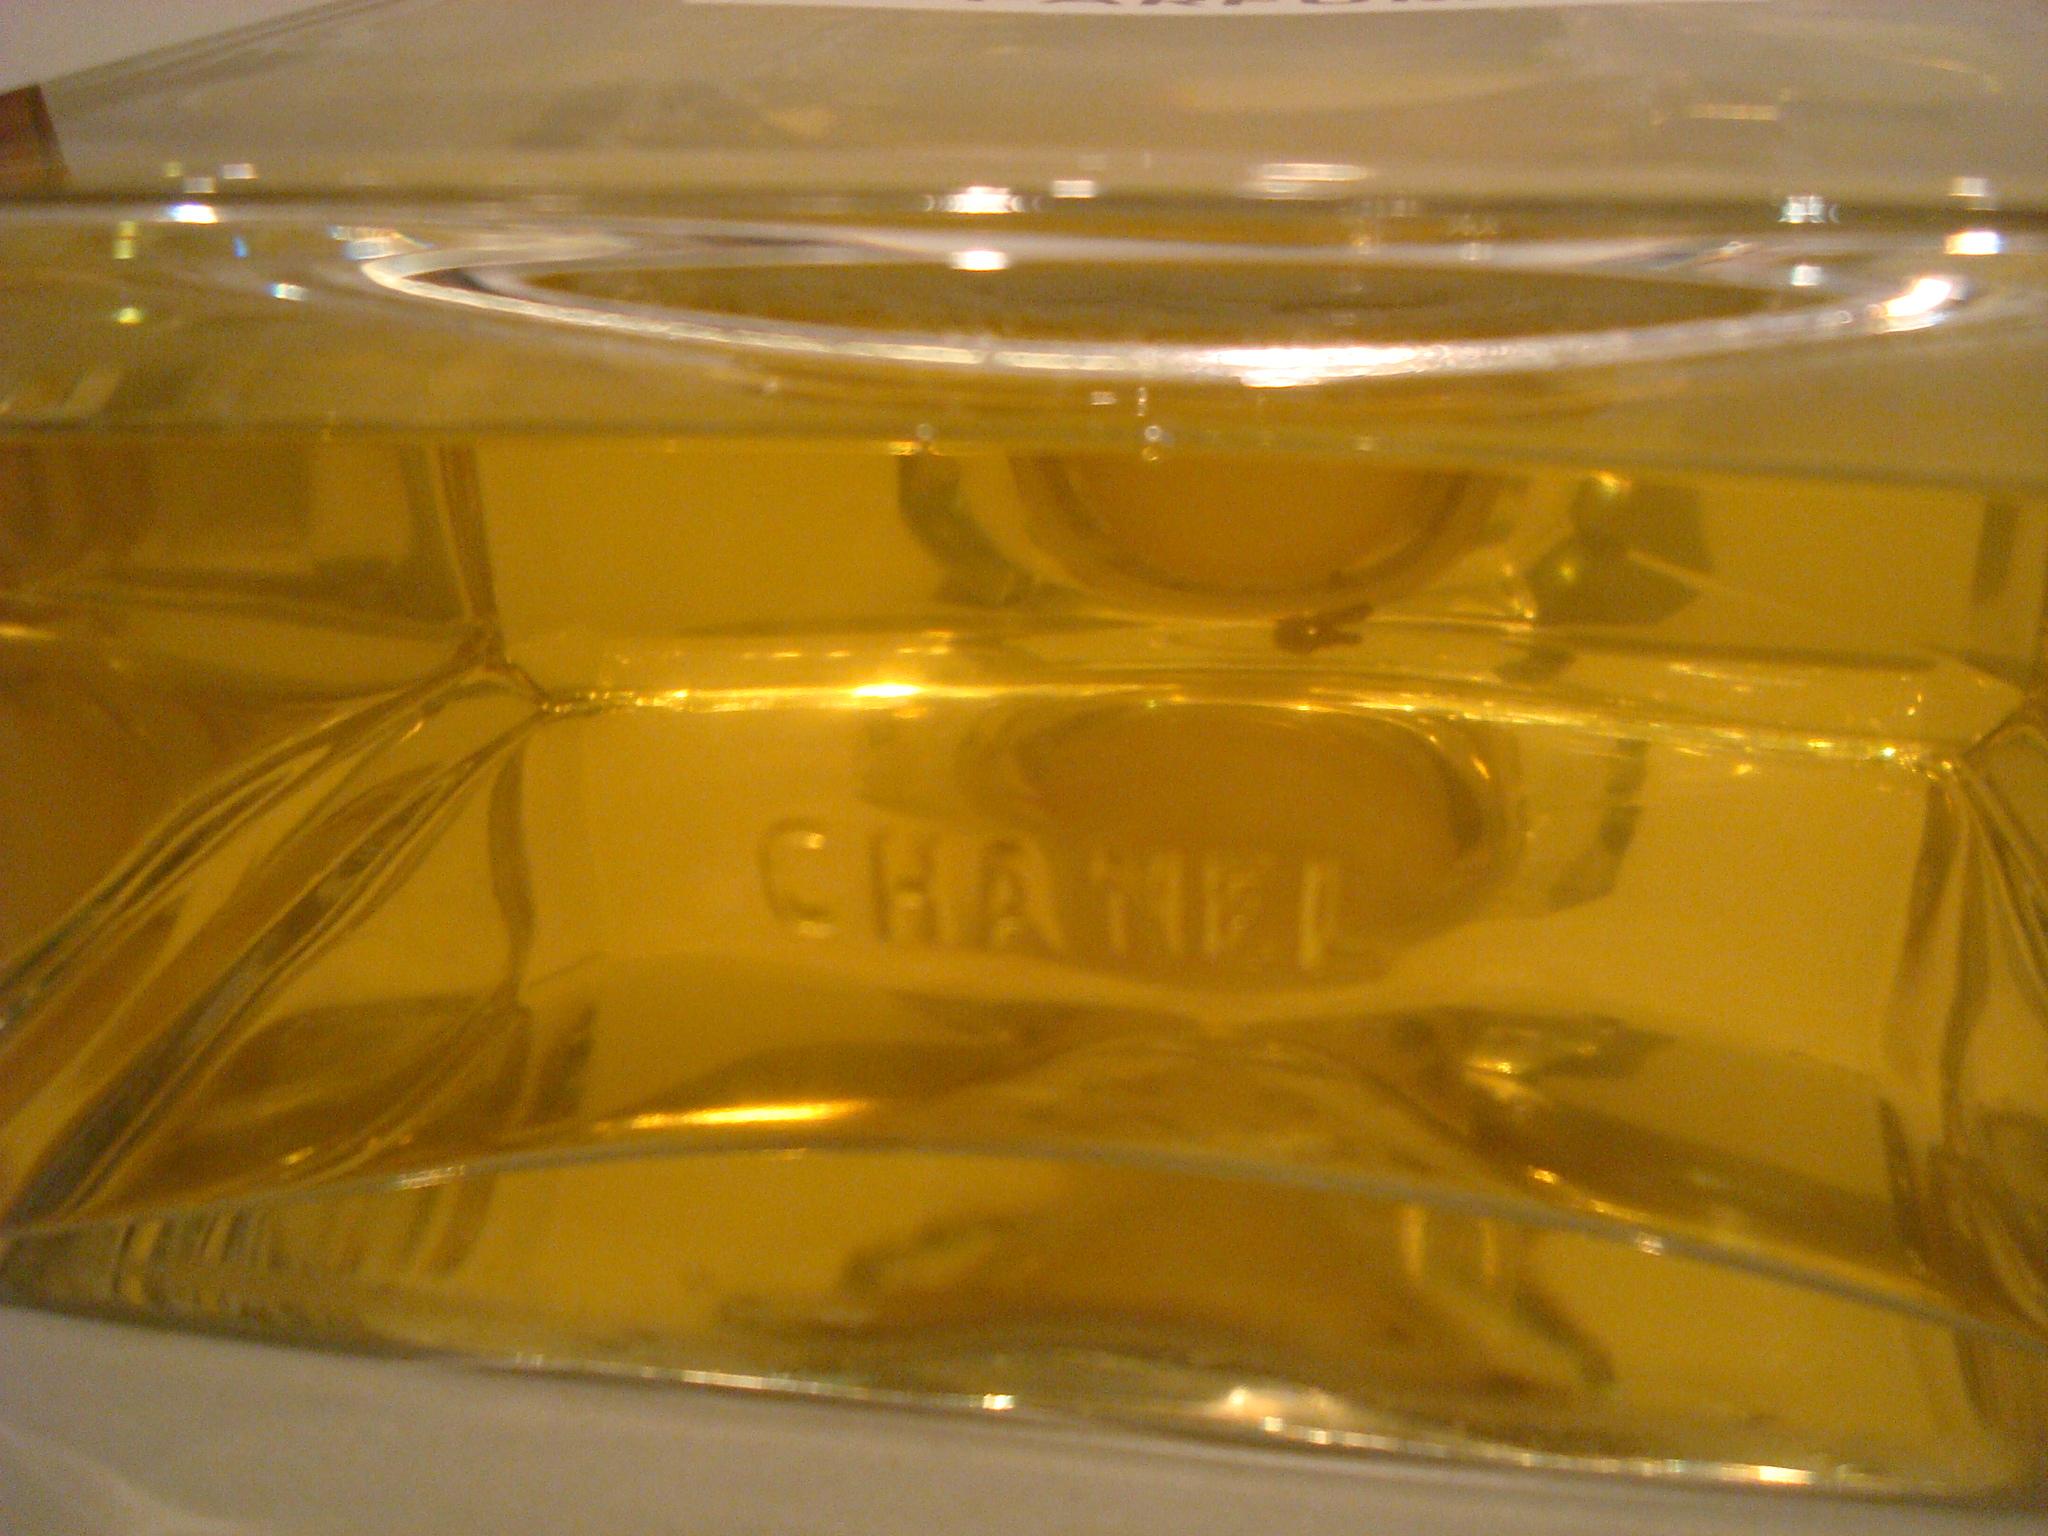 Chanel N5 Huge Store Display Perfume Bottle Advertising, France, 20th ...